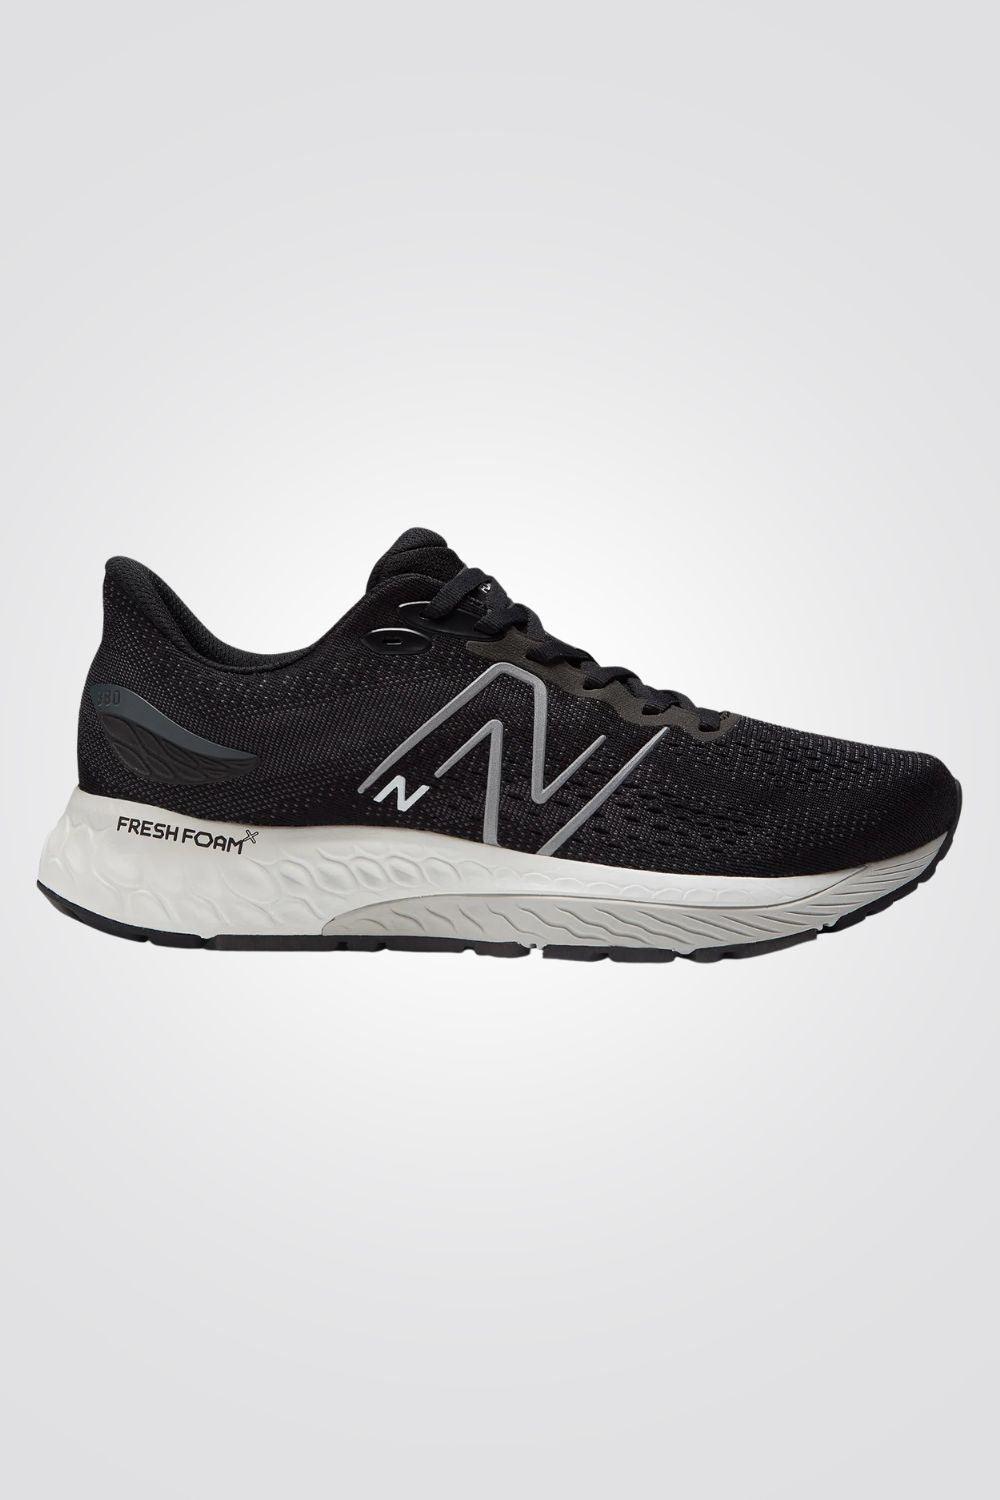 NEW BALANCE - נעלי ריצה לגבר M880 בצבע שחור - MASHBIR//365